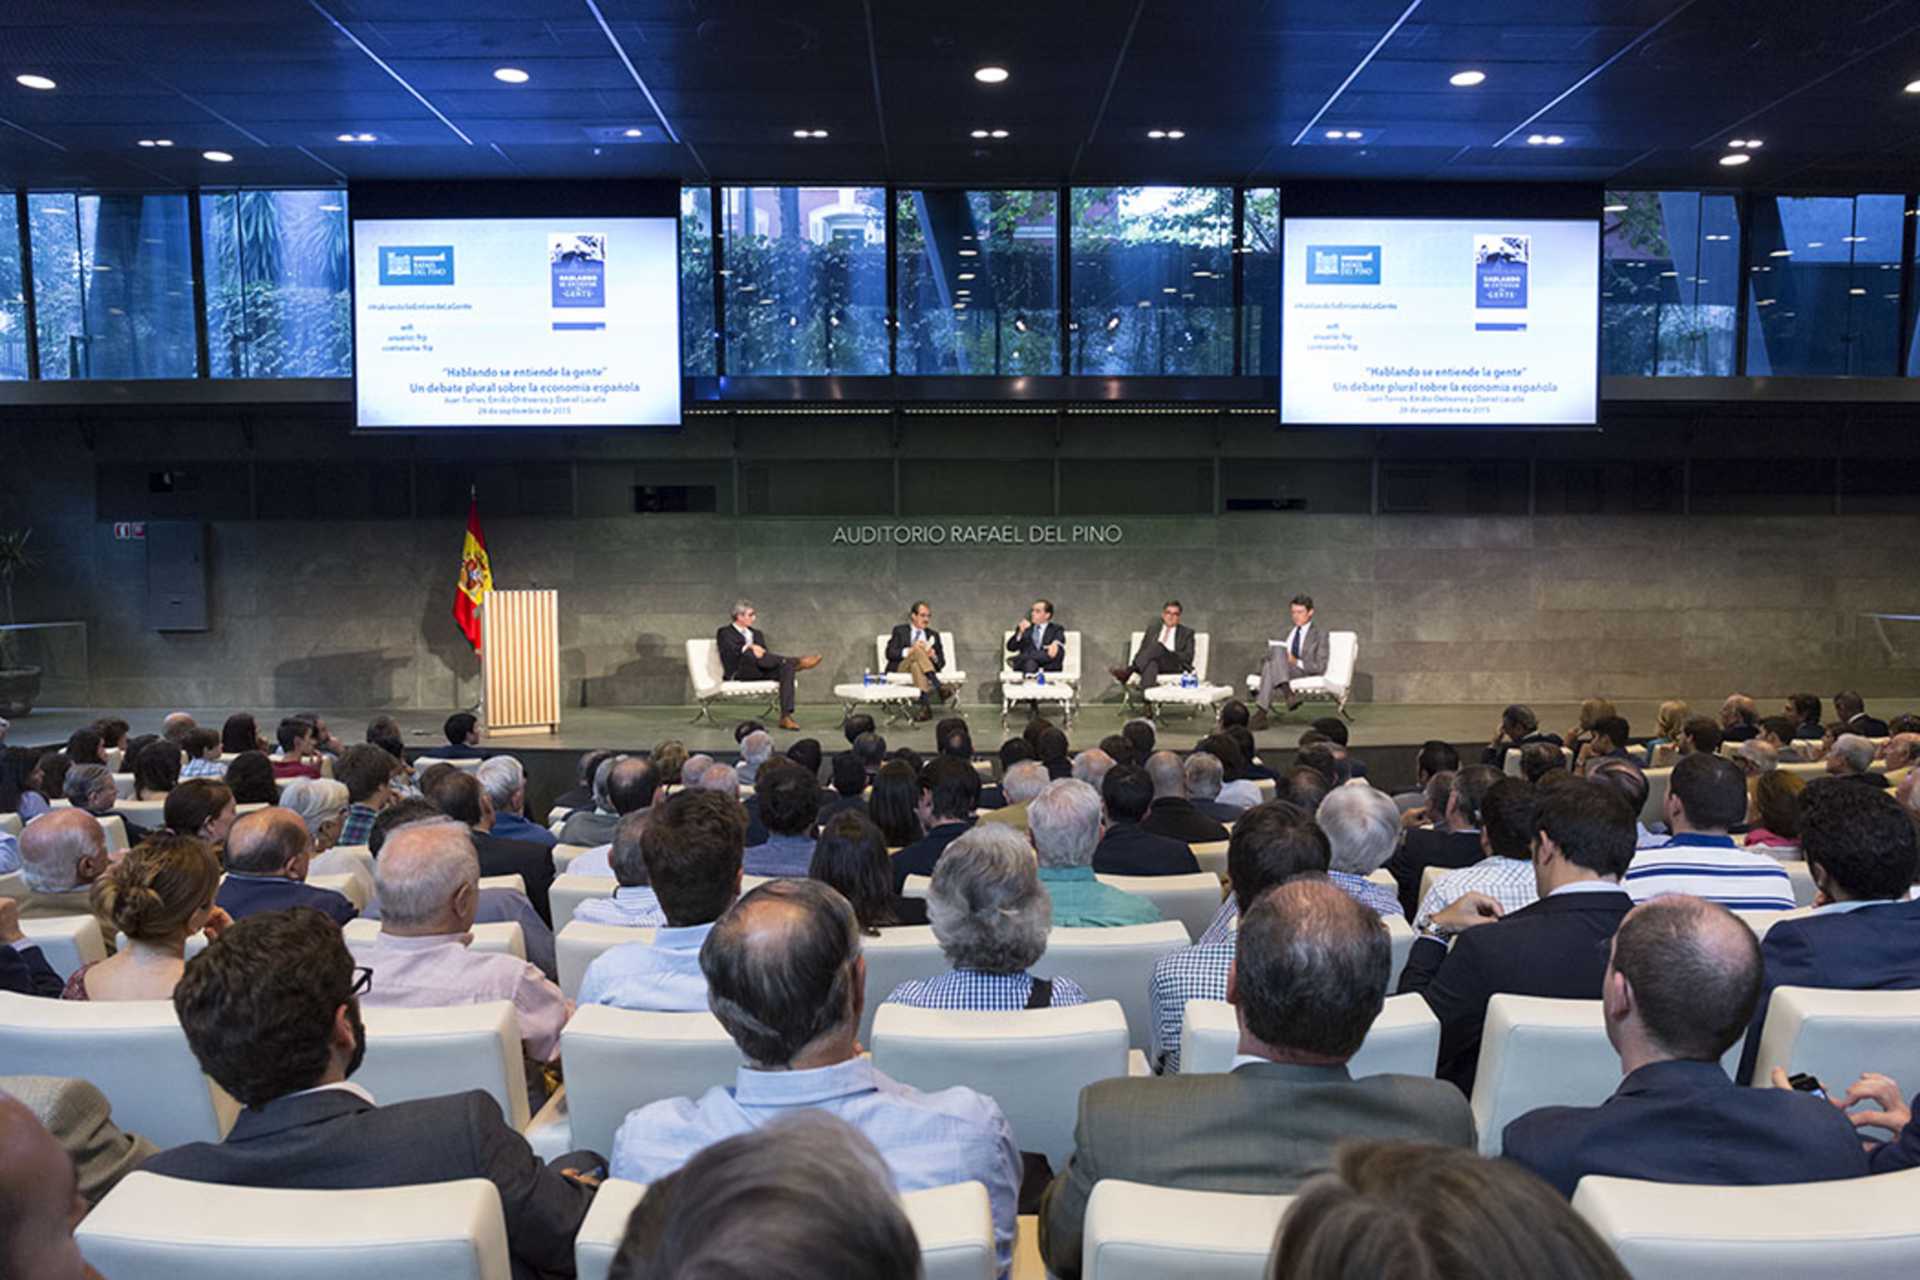 A pluralistic debate on the Spanish economy